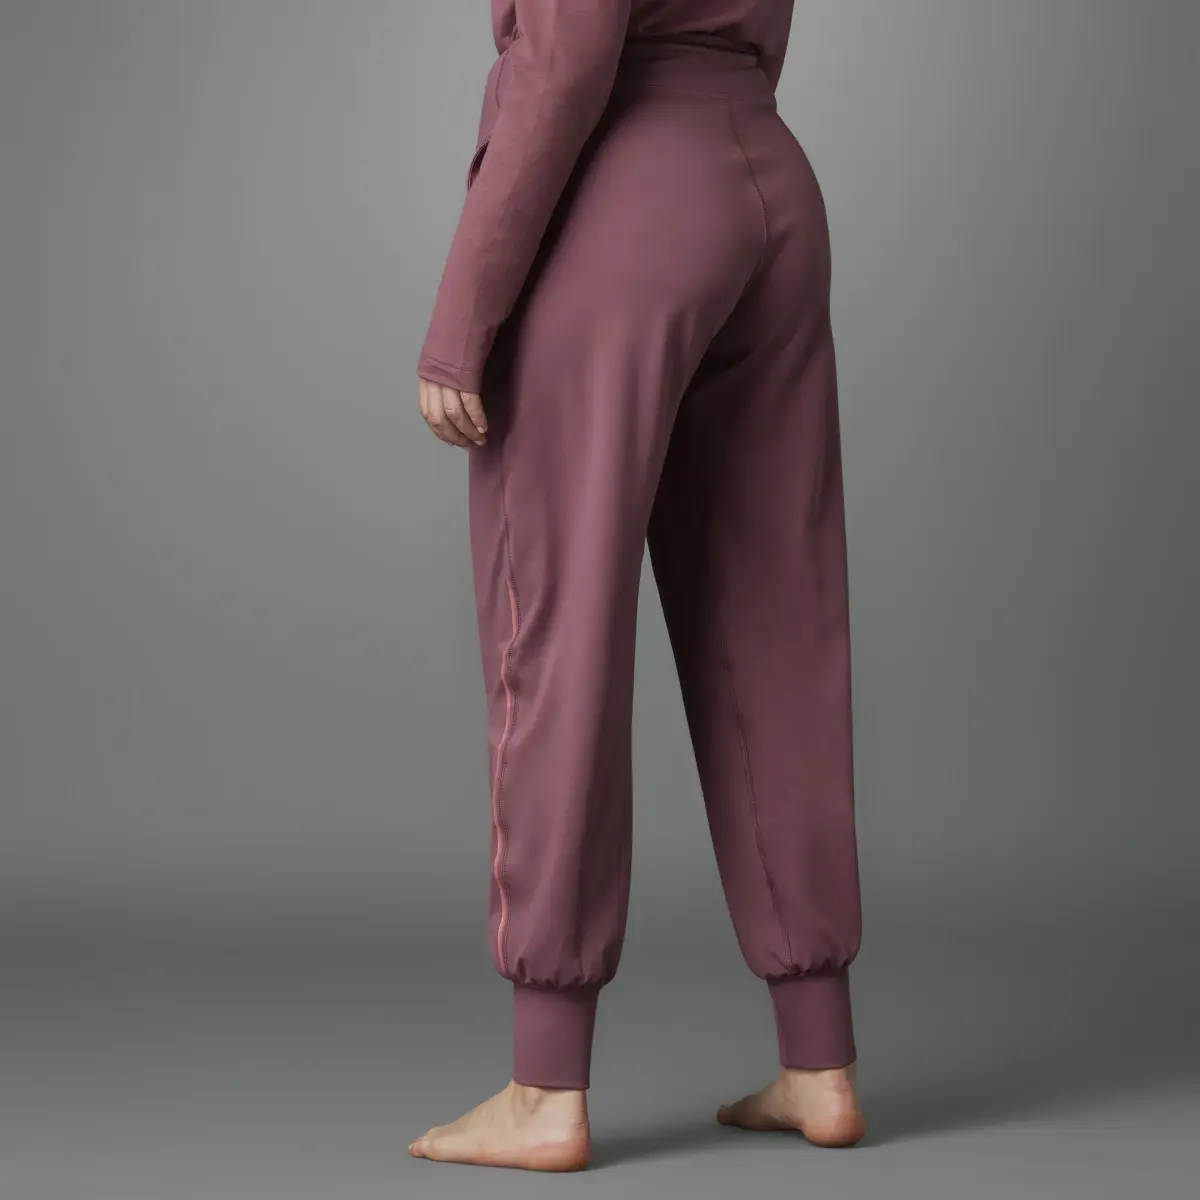 Adidas Authentic Balance Yoga Pants. 2